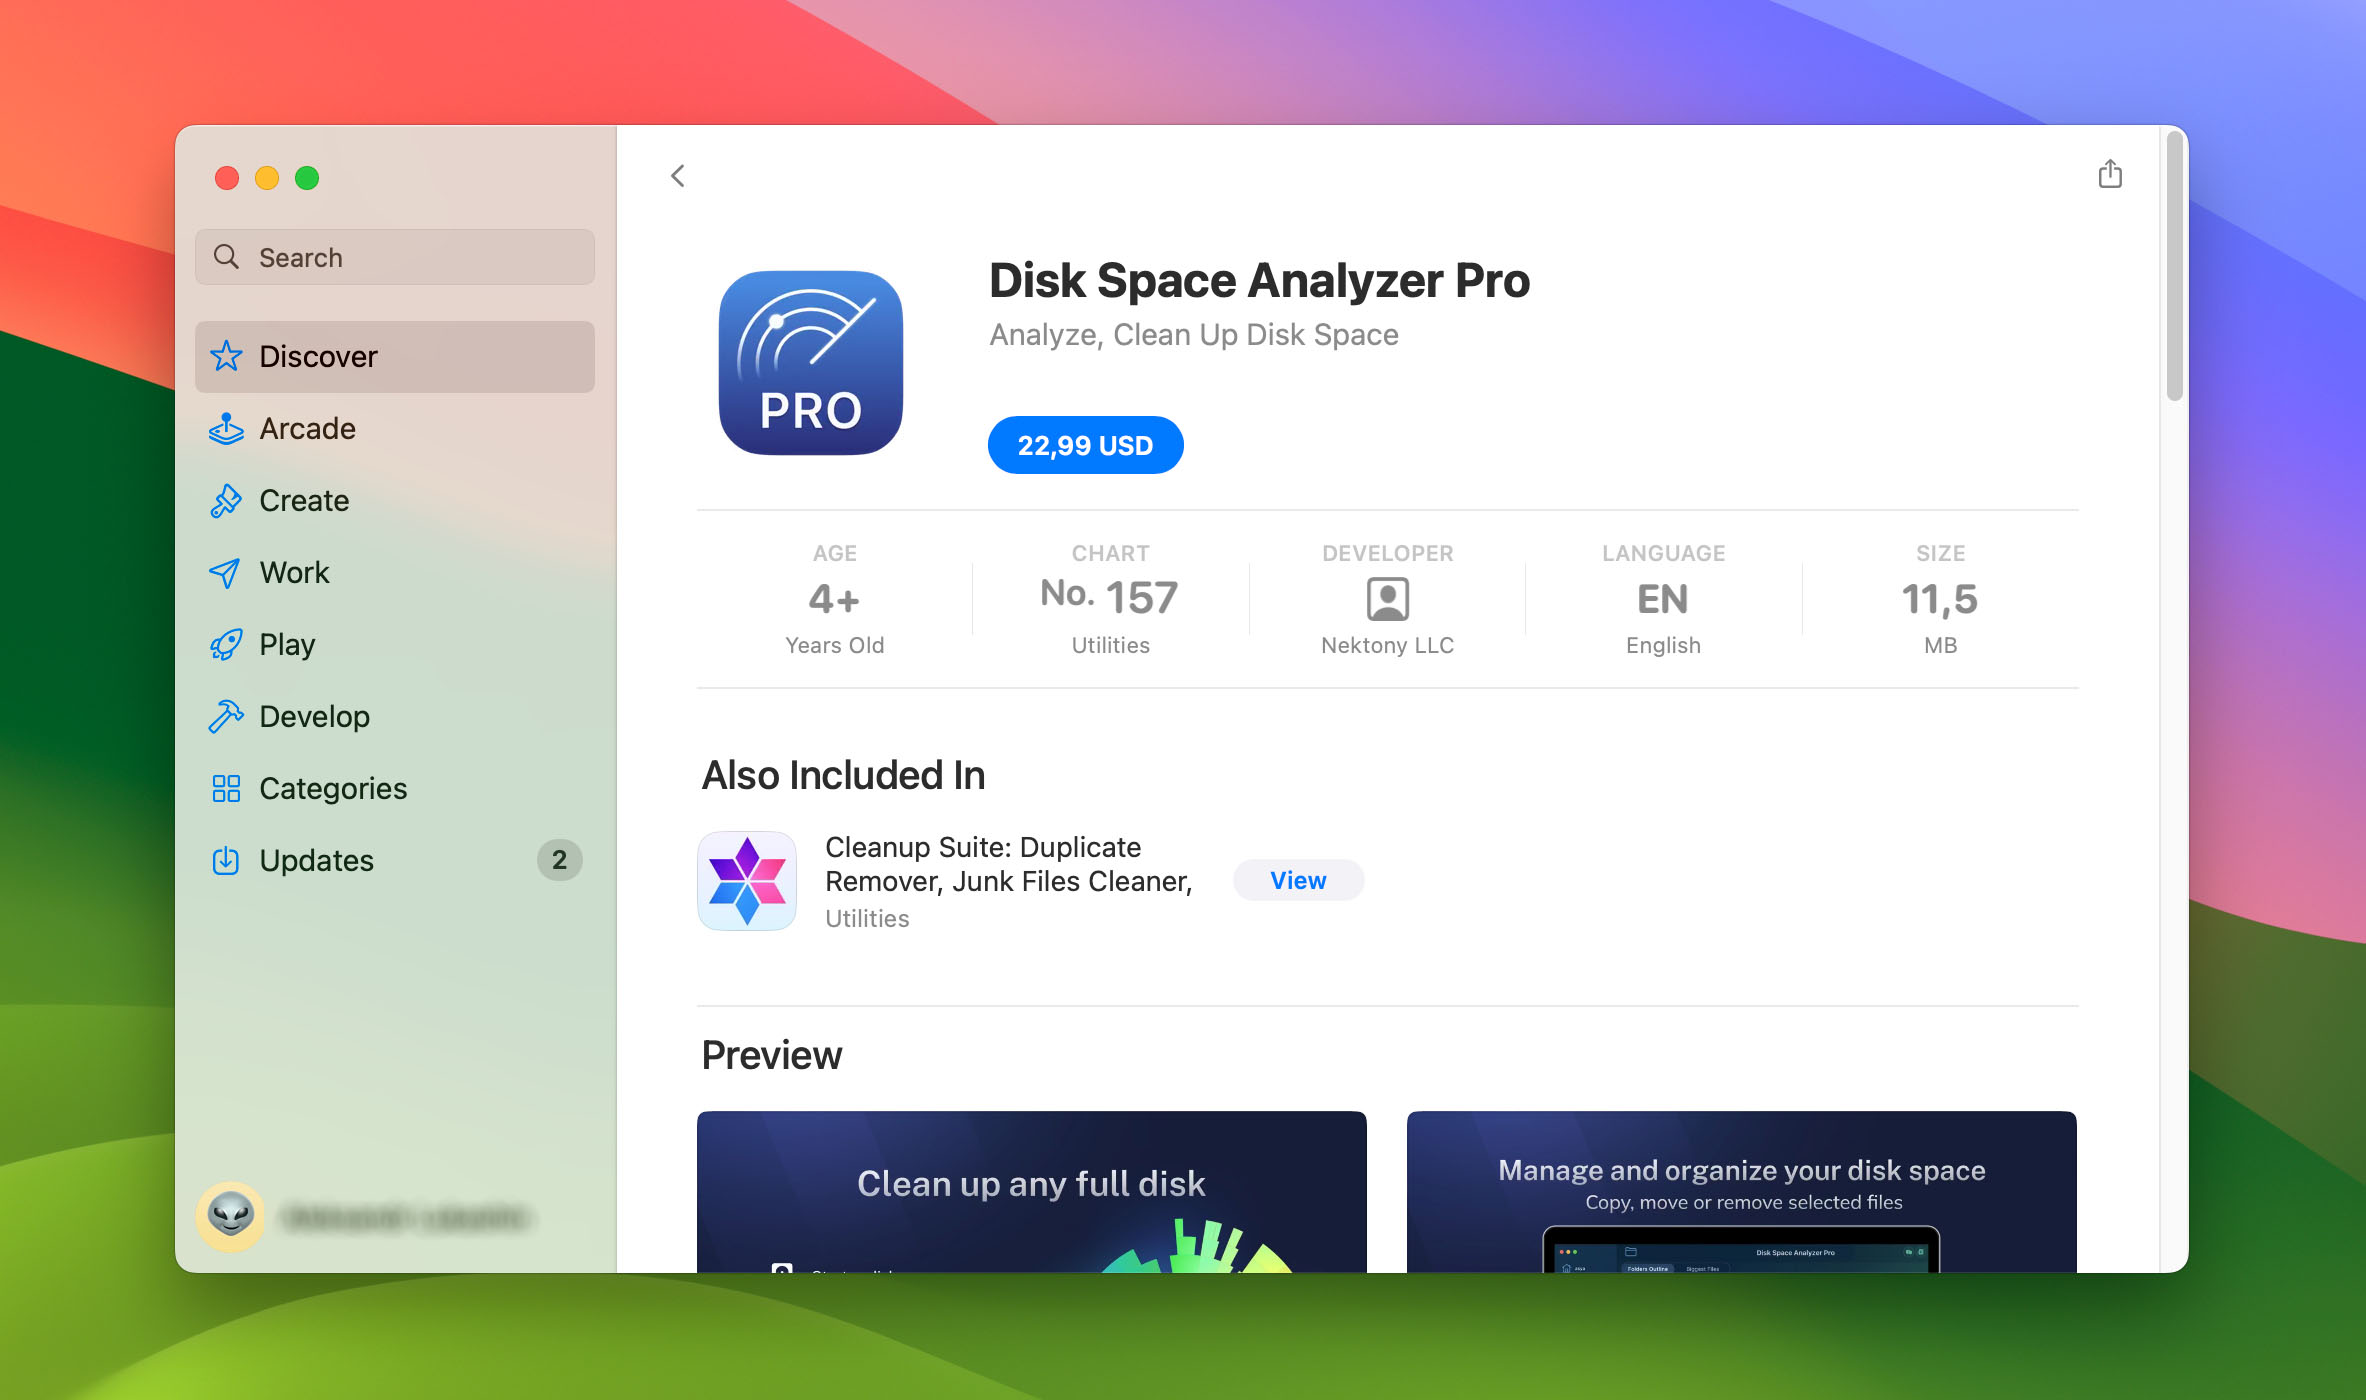 Disk Space Analyzer Pro